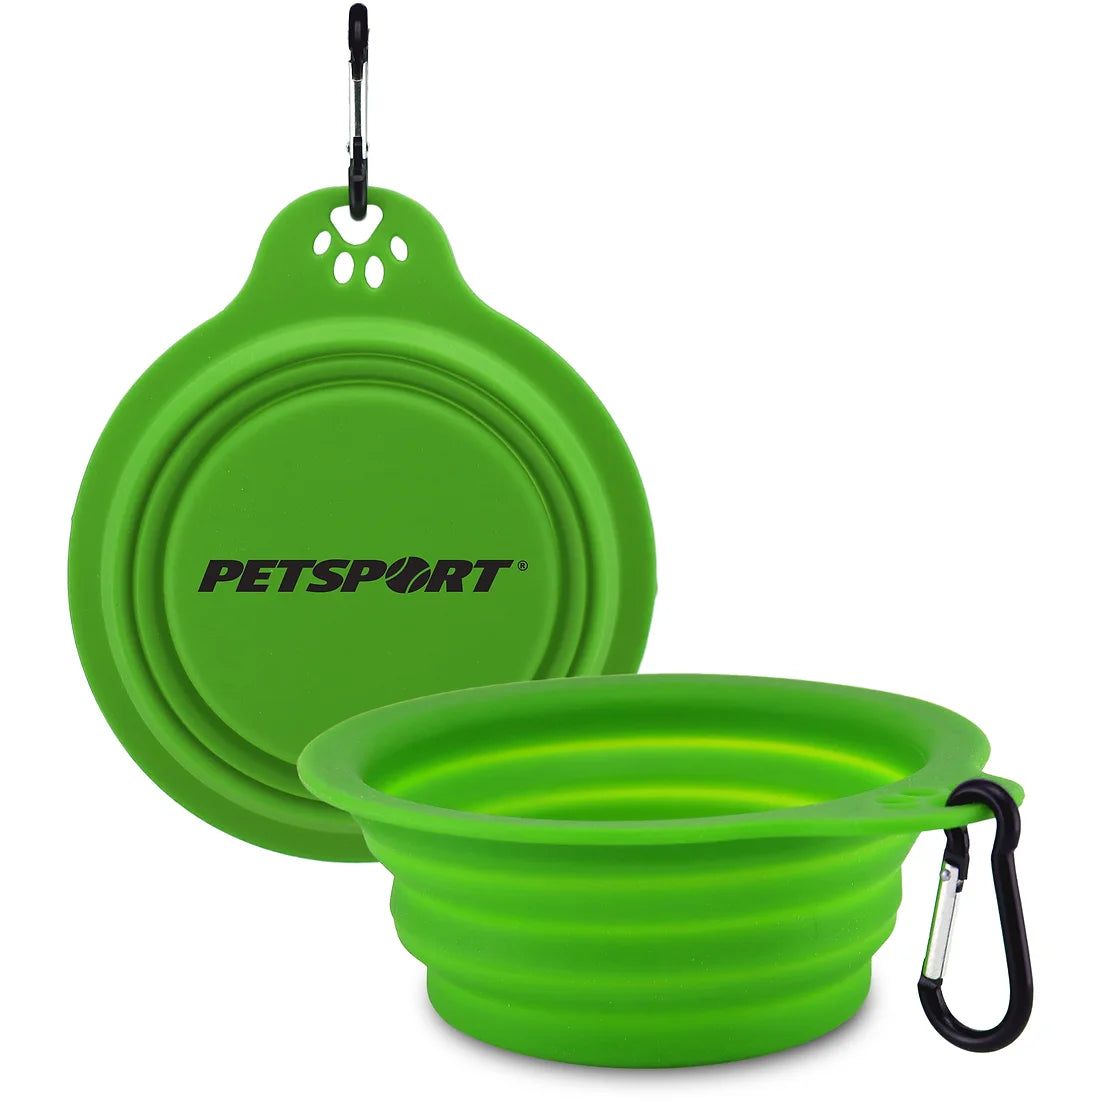 Petsport - Clip-A-Bowl Silicone